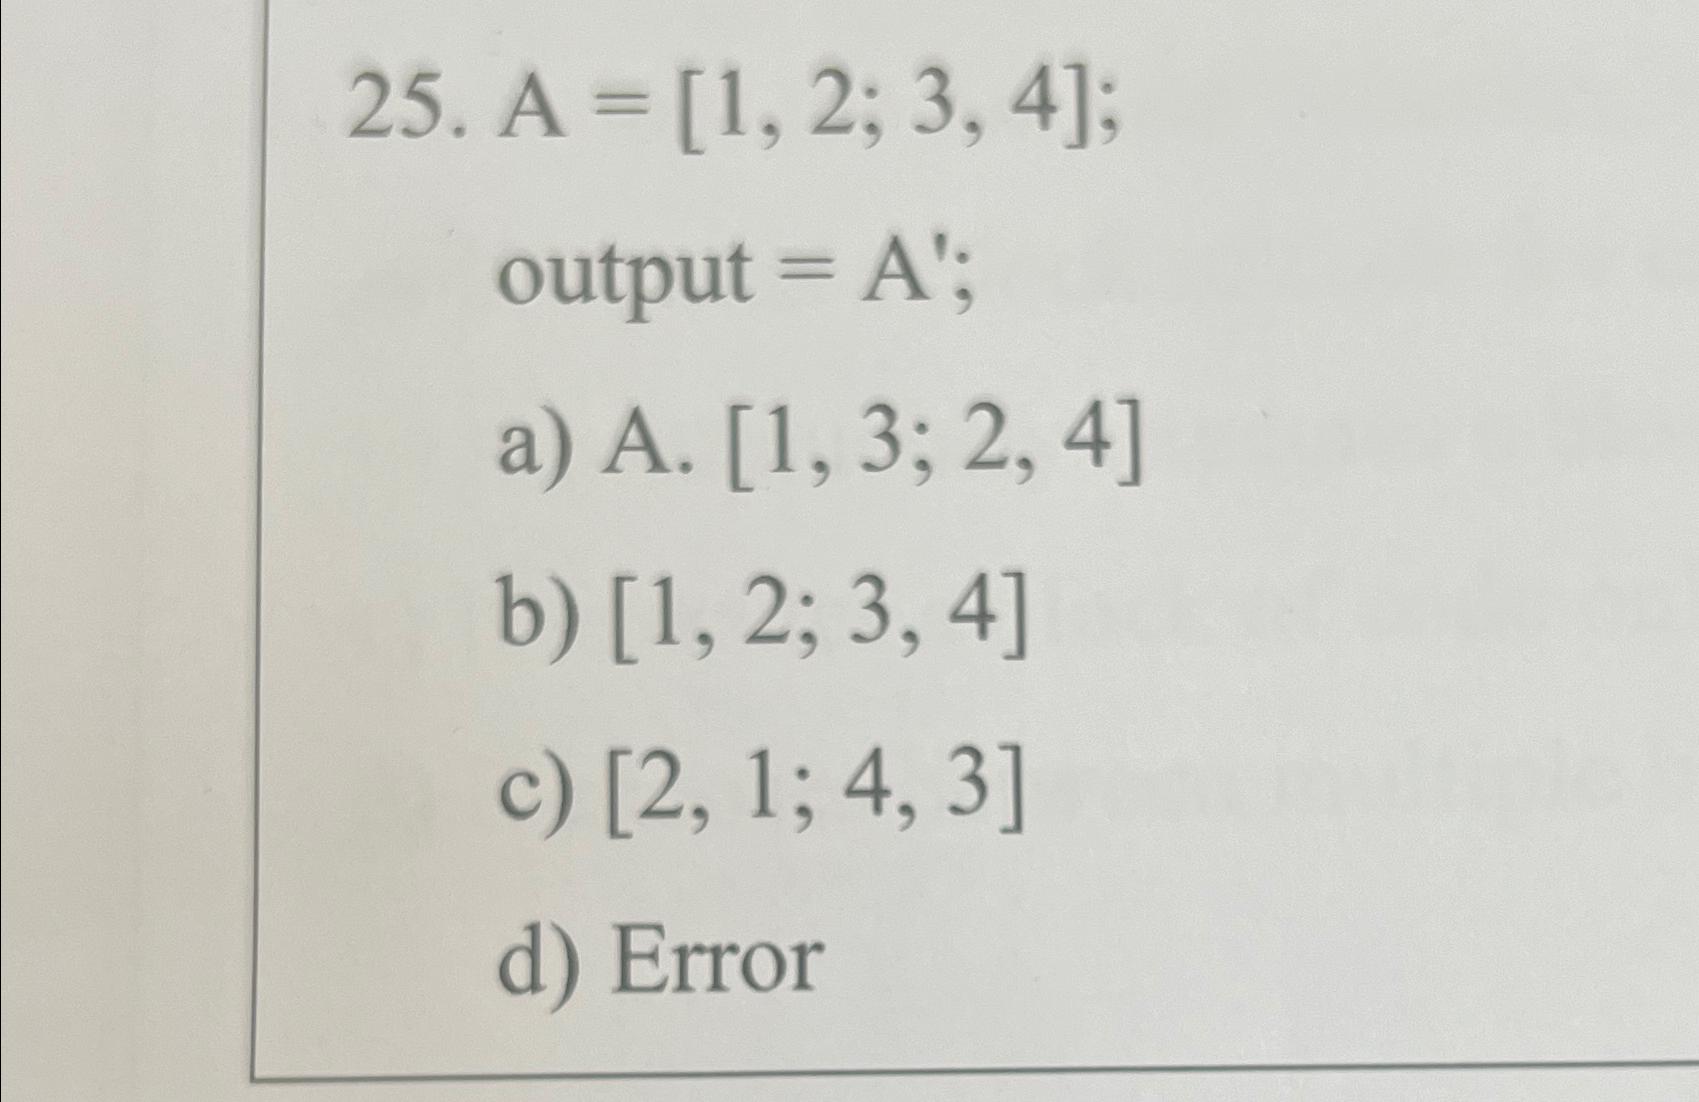 25. A = [1, 2, 3, 4]; output = A'; a) A. [1, 3; 2, 4] b) [1, 2; 3, 4] c) [2, 1; 4, 3] d) Error